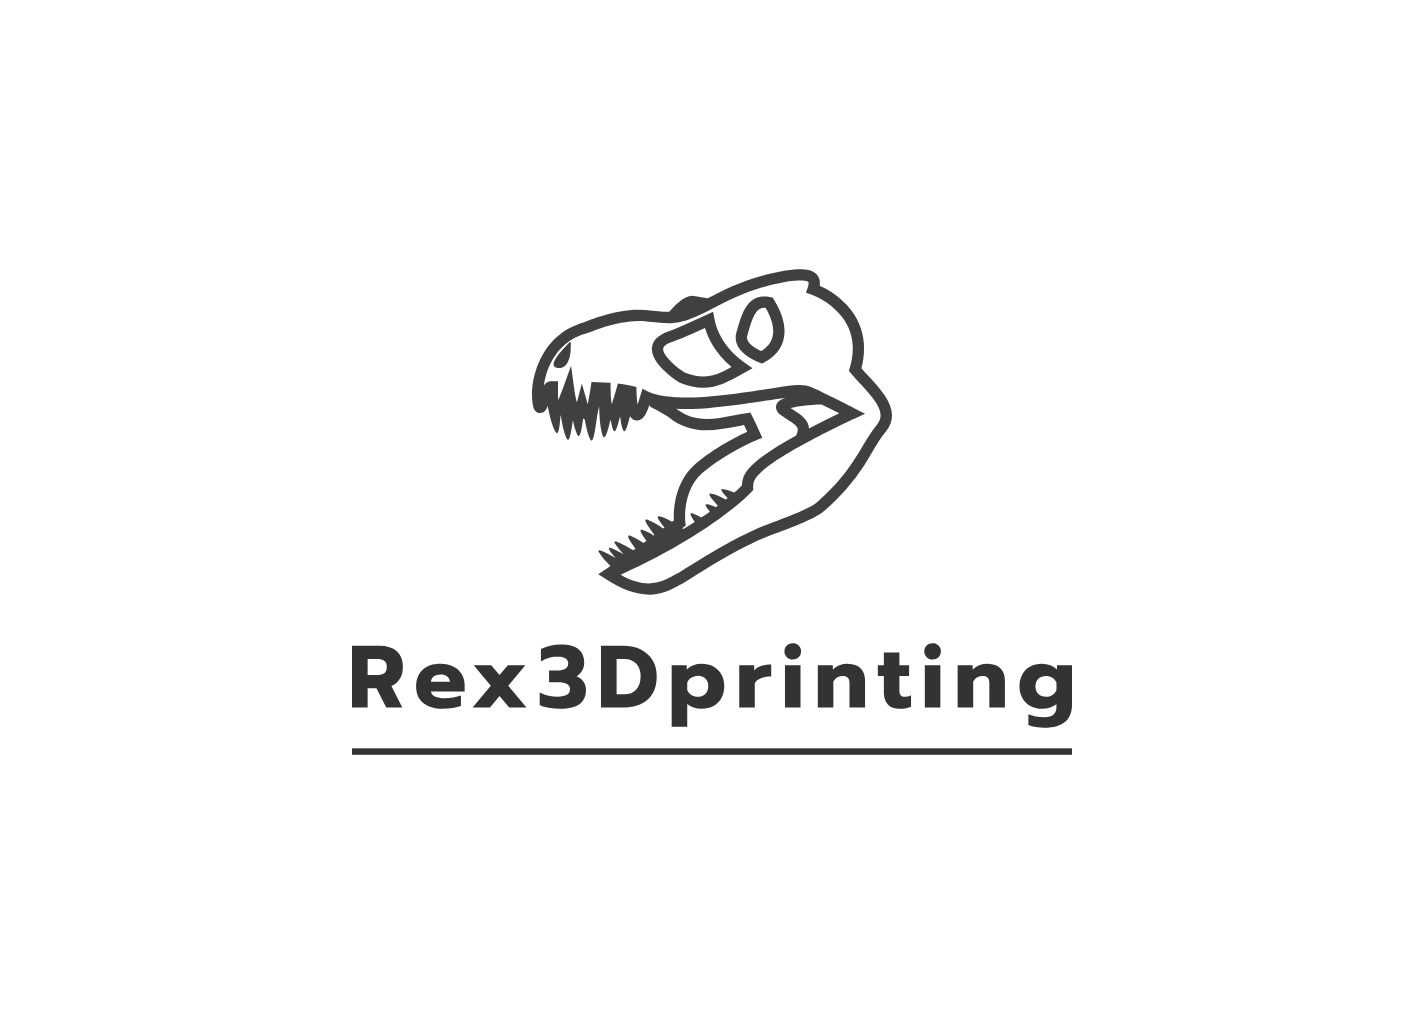 Rex3dprinting